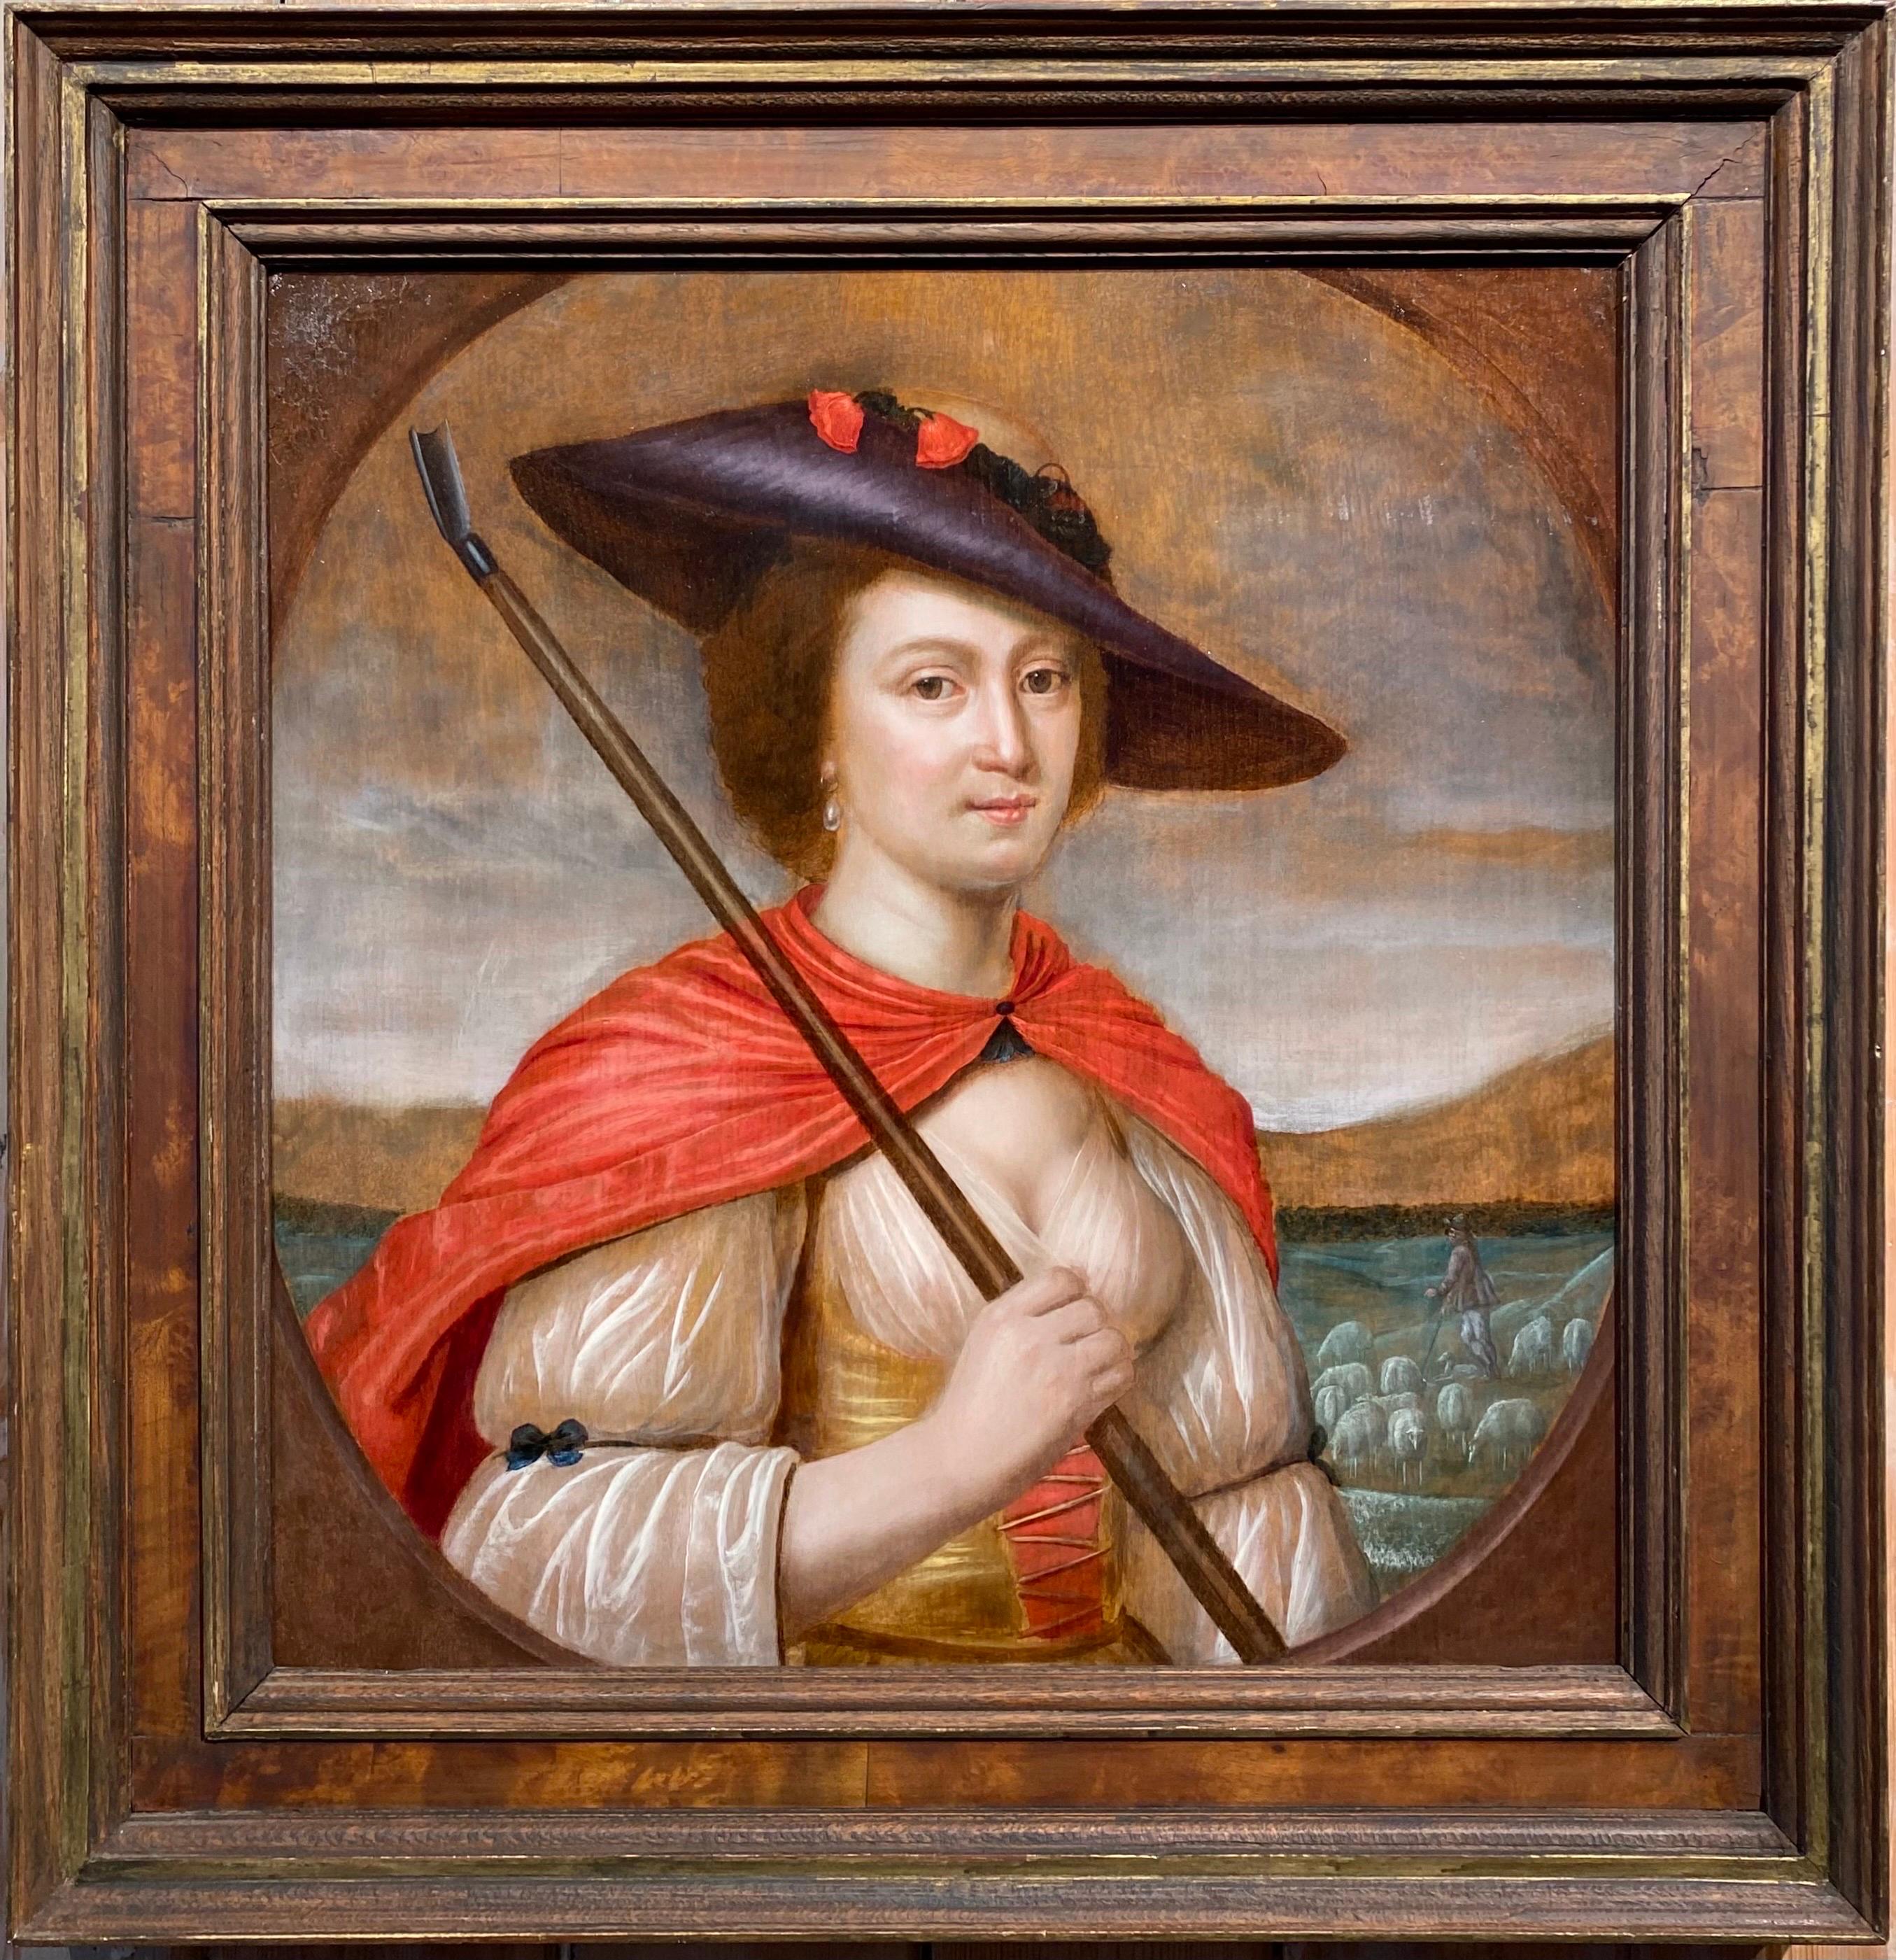 Portrait of a Lady as a Shepherdess